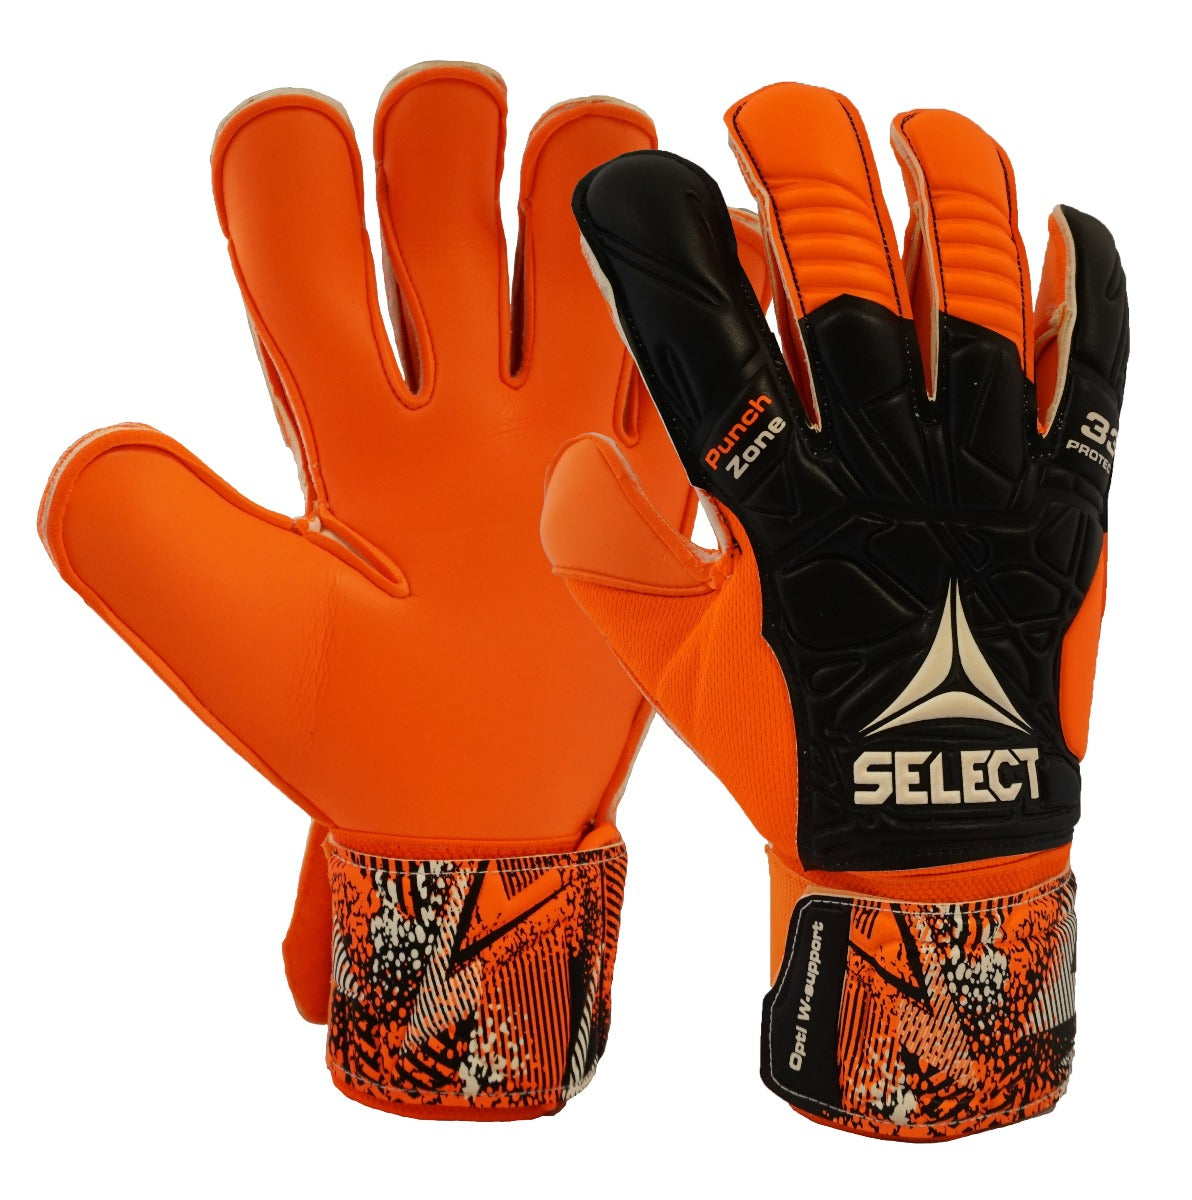 Select 33 Protec Hyla Cut Goalkeeper Gloves - Orange-Black (Pair)